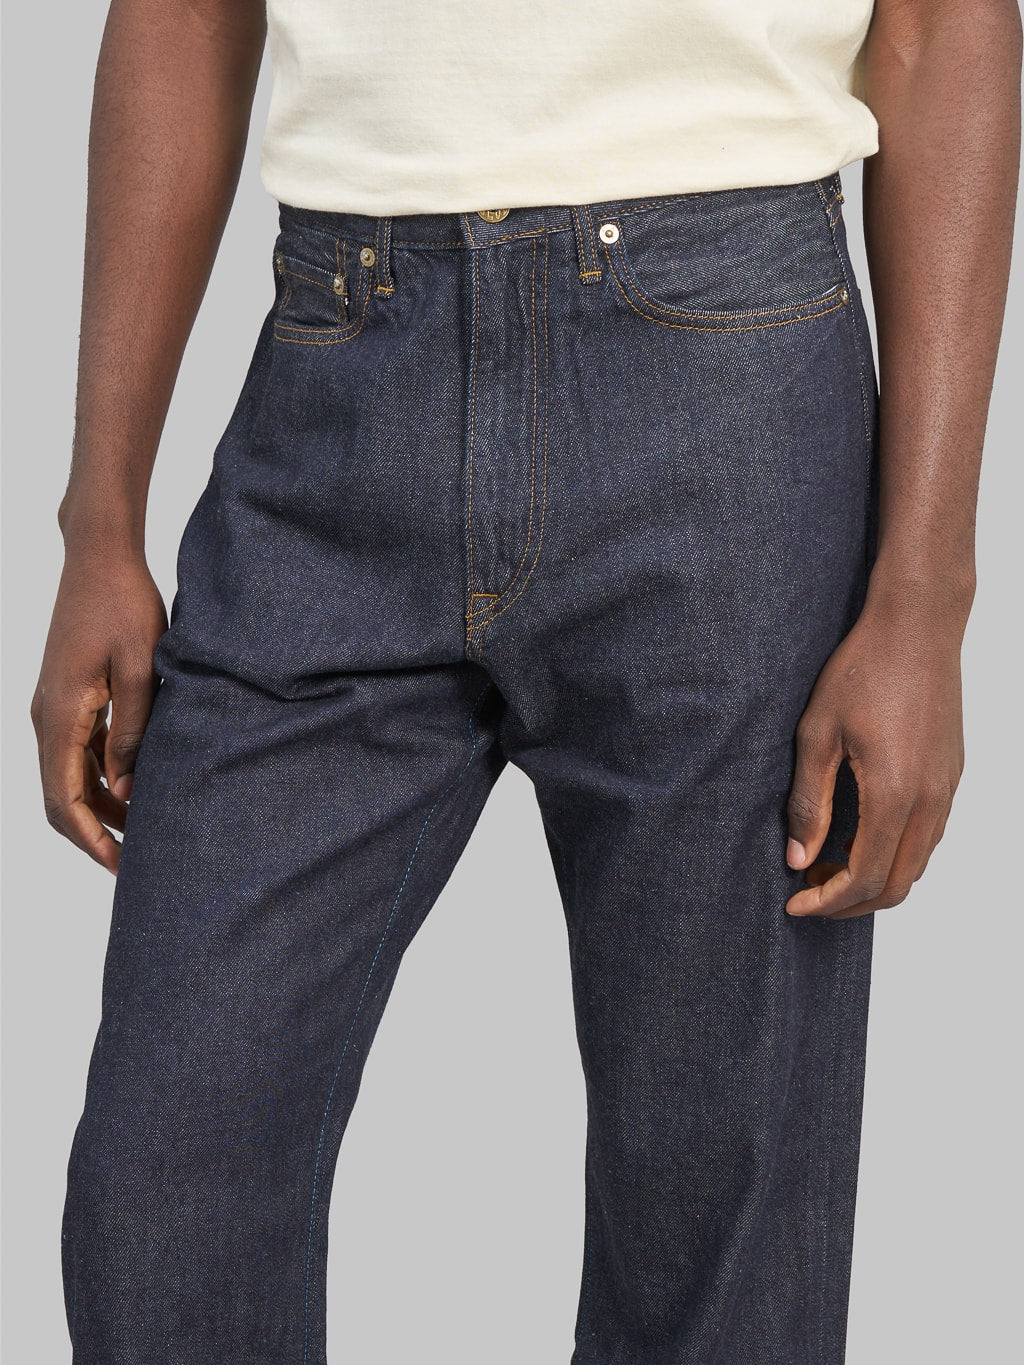 Japan Blue J508 lightweight selvedge denim loose Jeans waist